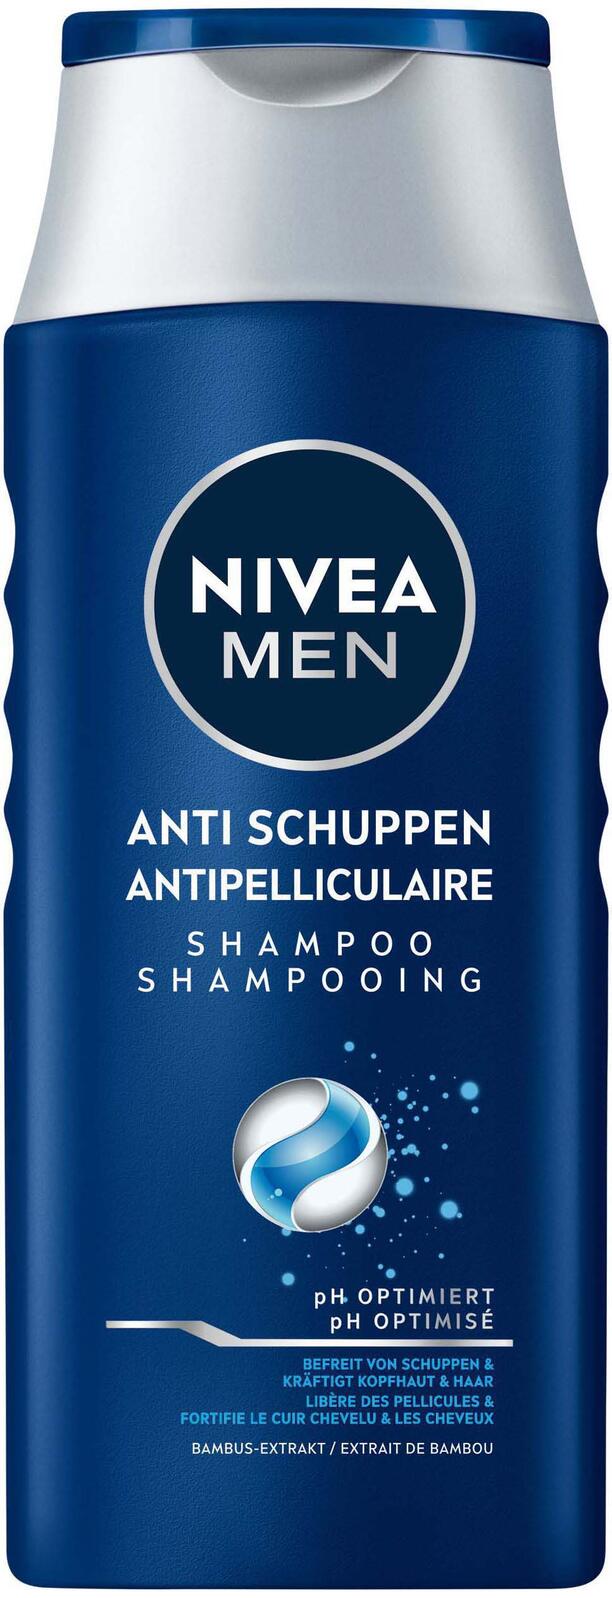 NIVEA MEN Shampoo Anti-Schuppen 250 ml